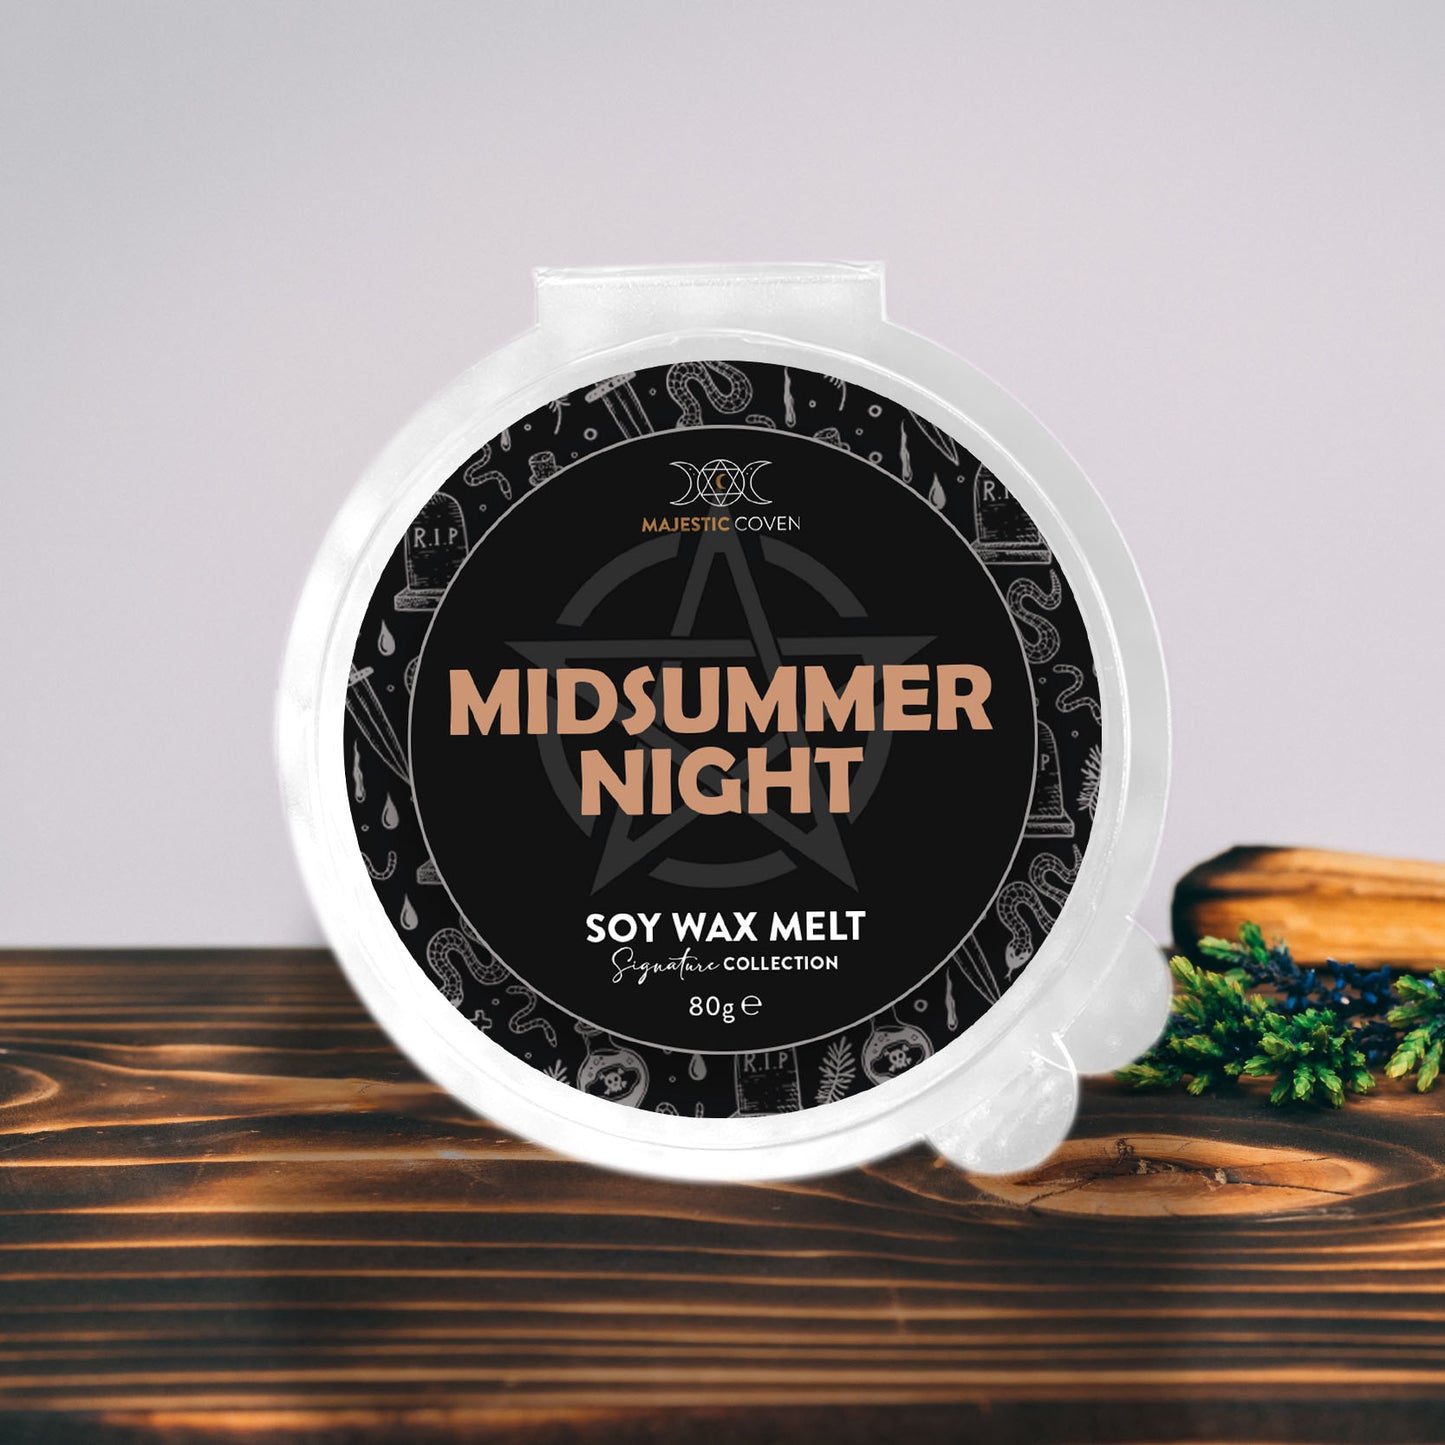 Midsummer Night - Soy Wax Melt 80g Segment Pot Majestic Coven